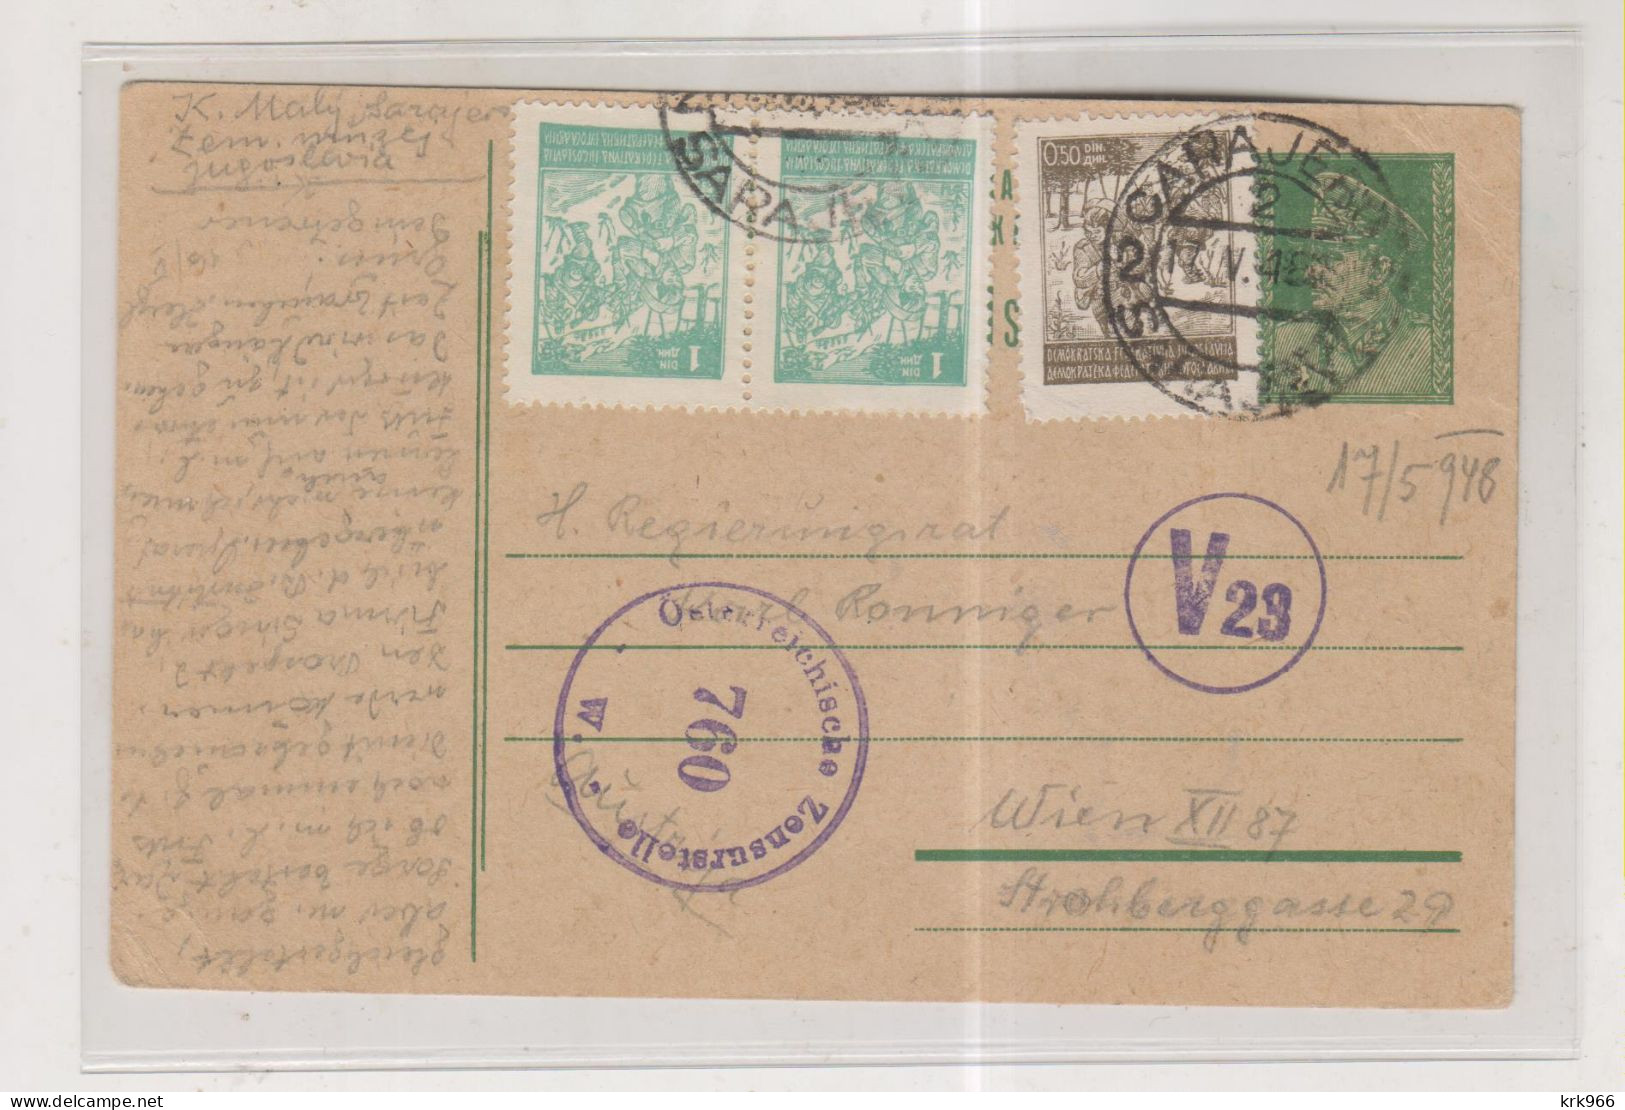 YUGOSLAVIA,1948 SARAJEVO Censored Postal Stationery To Austria - Covers & Documents